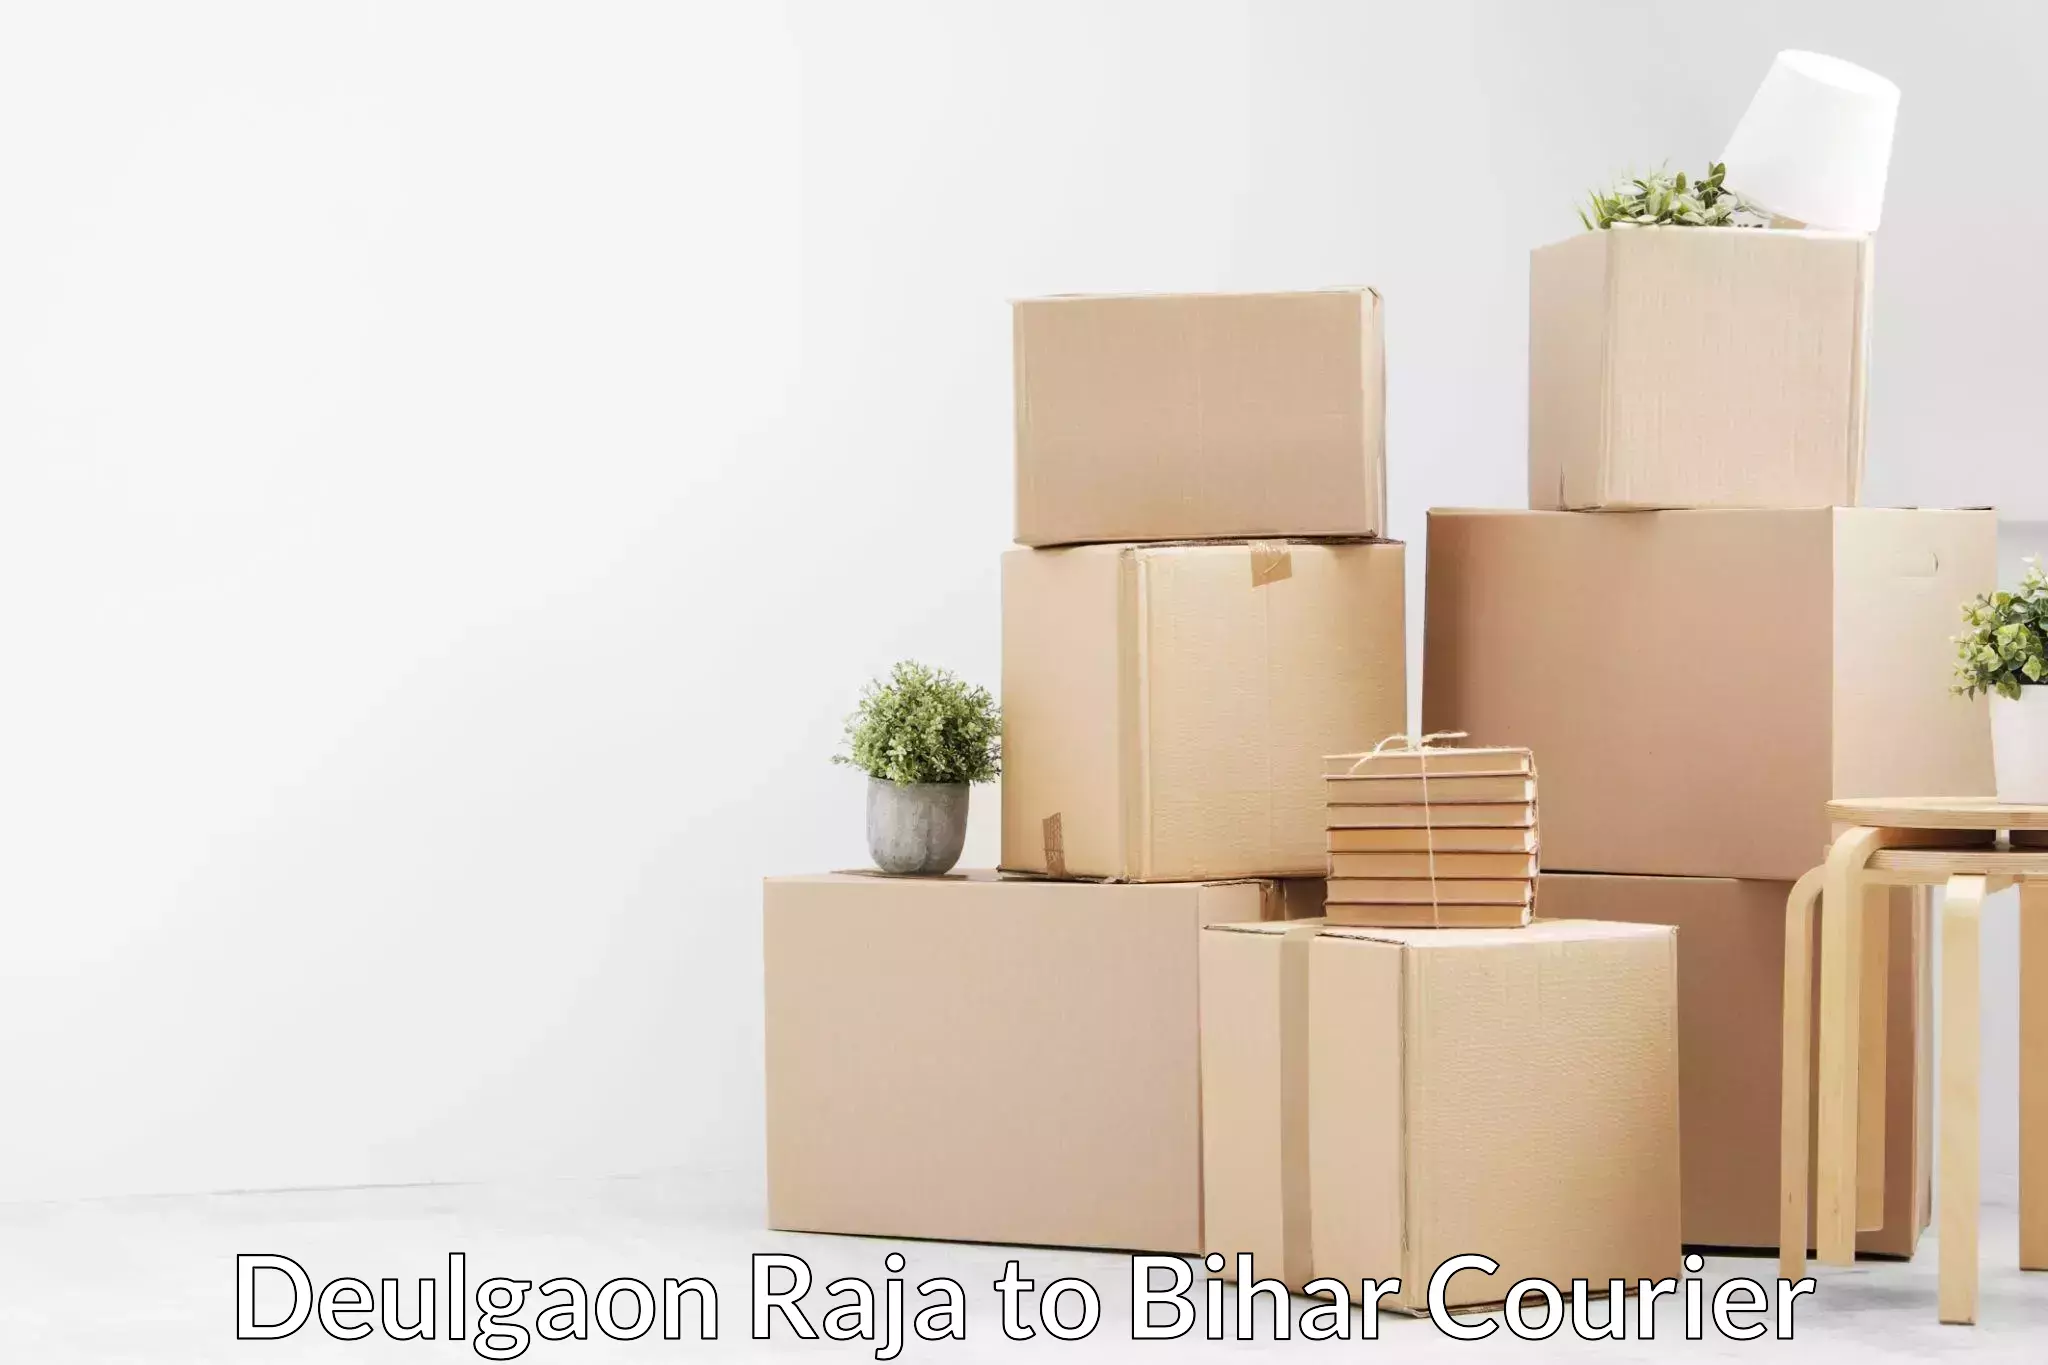 Furniture relocation experts Deulgaon Raja to Dhaka